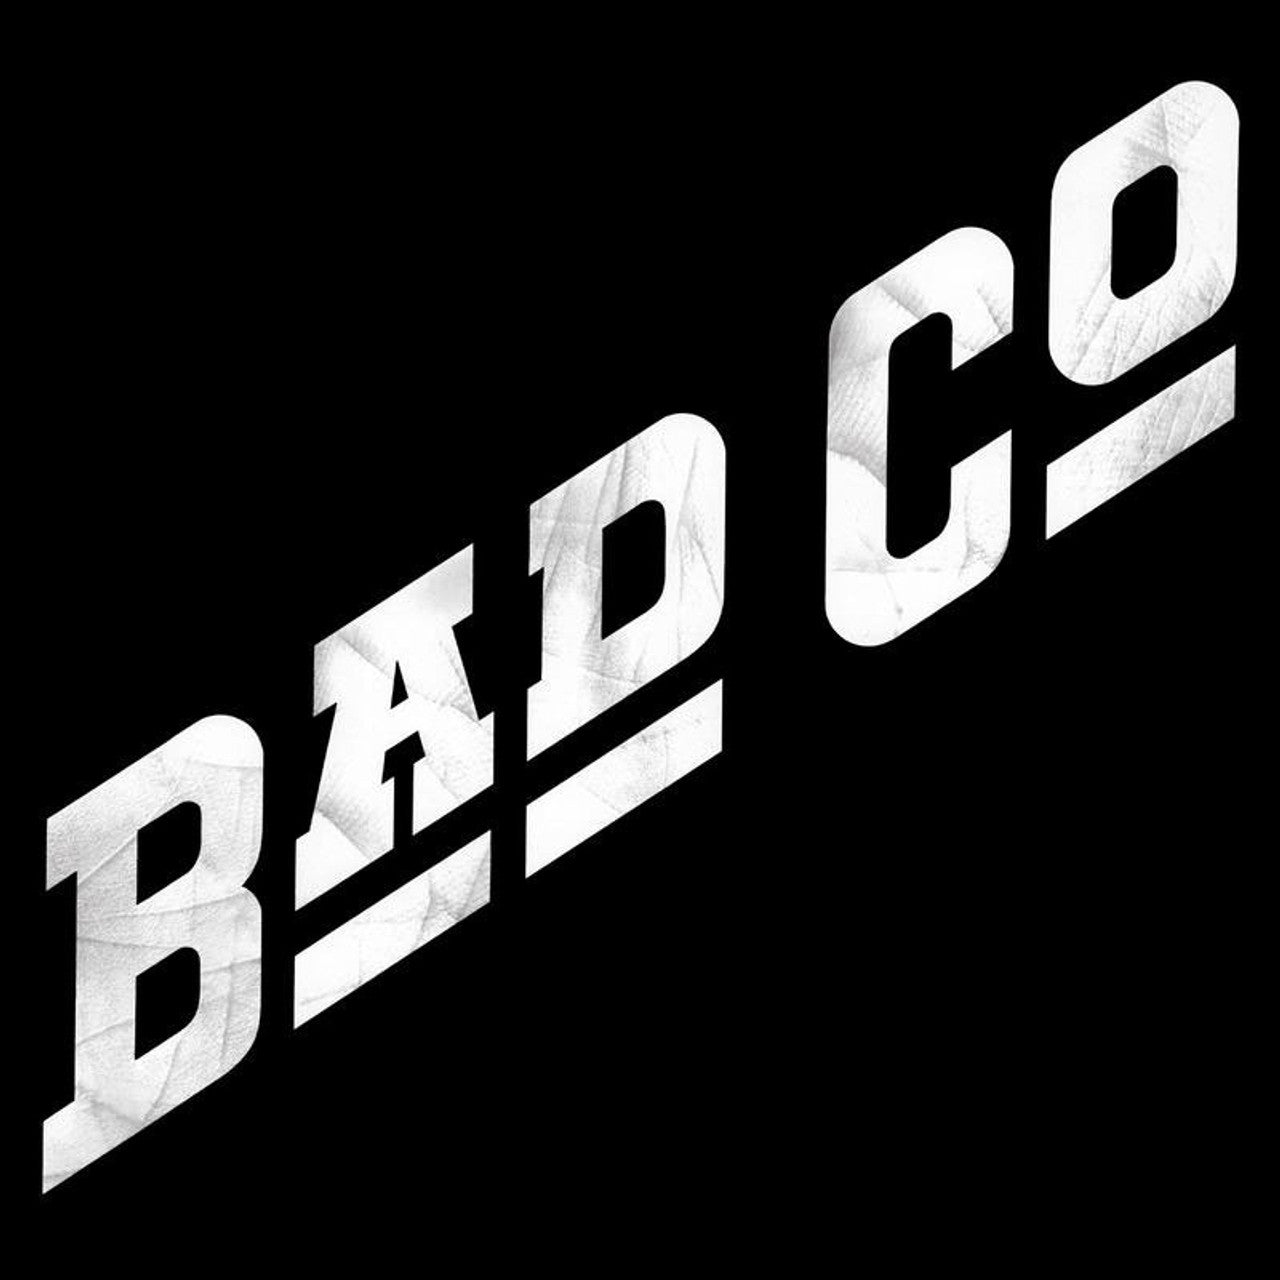 Bad Company - Bad Company [2LP] (180 Gram 45RPM Audiophile Vinyl, Stoughton gatefold jackets)